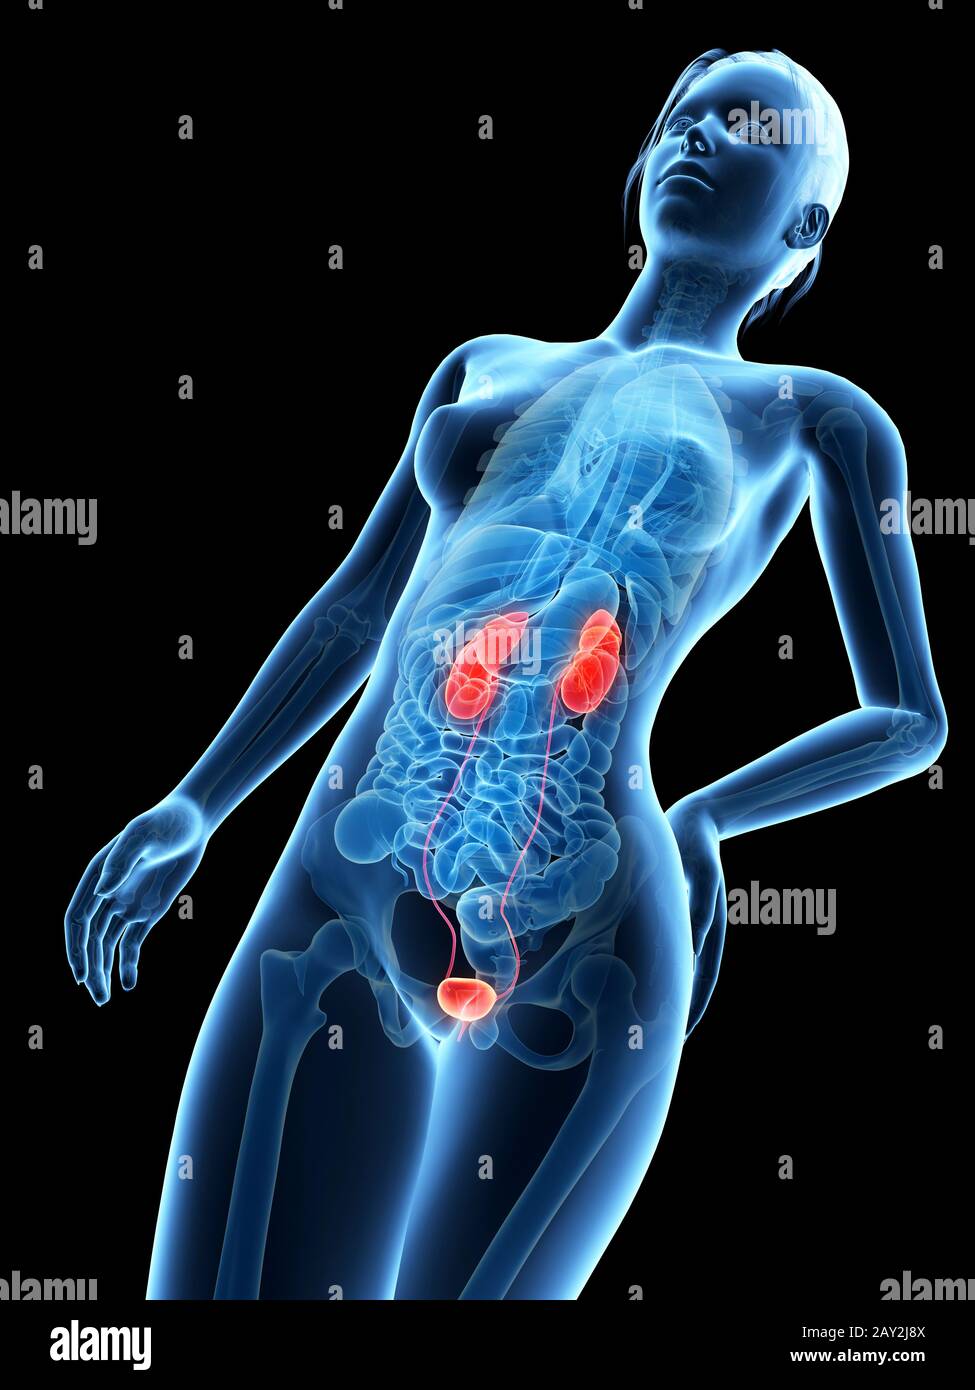 medical 3d illustration - female anatomy - kidneys Stock Photo